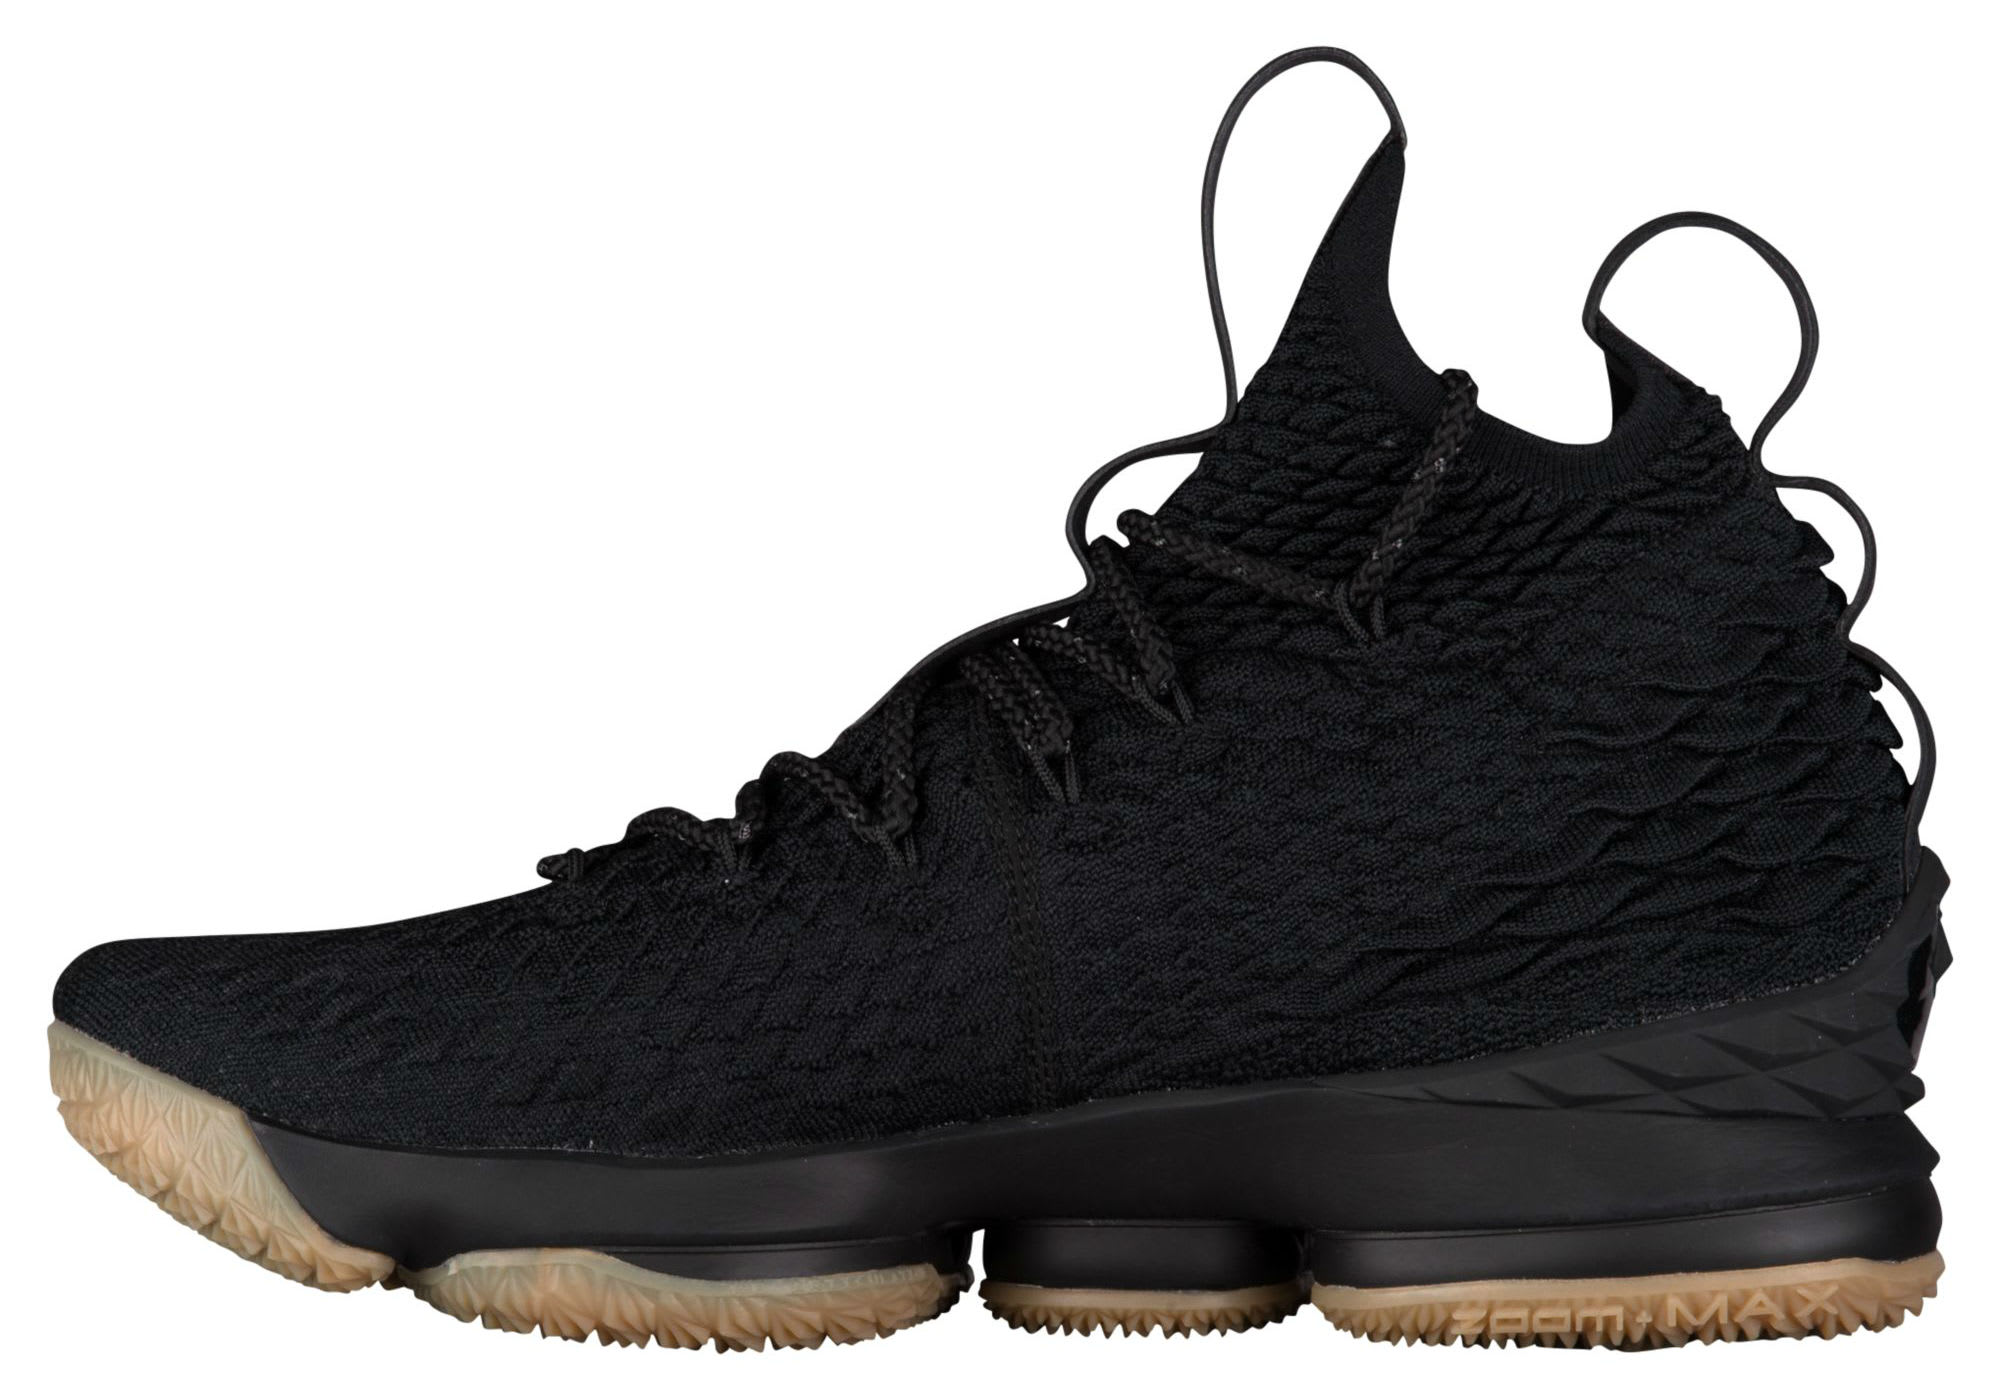 Nike LeBron 15 Black Gum Release Date 897648-300 Medial